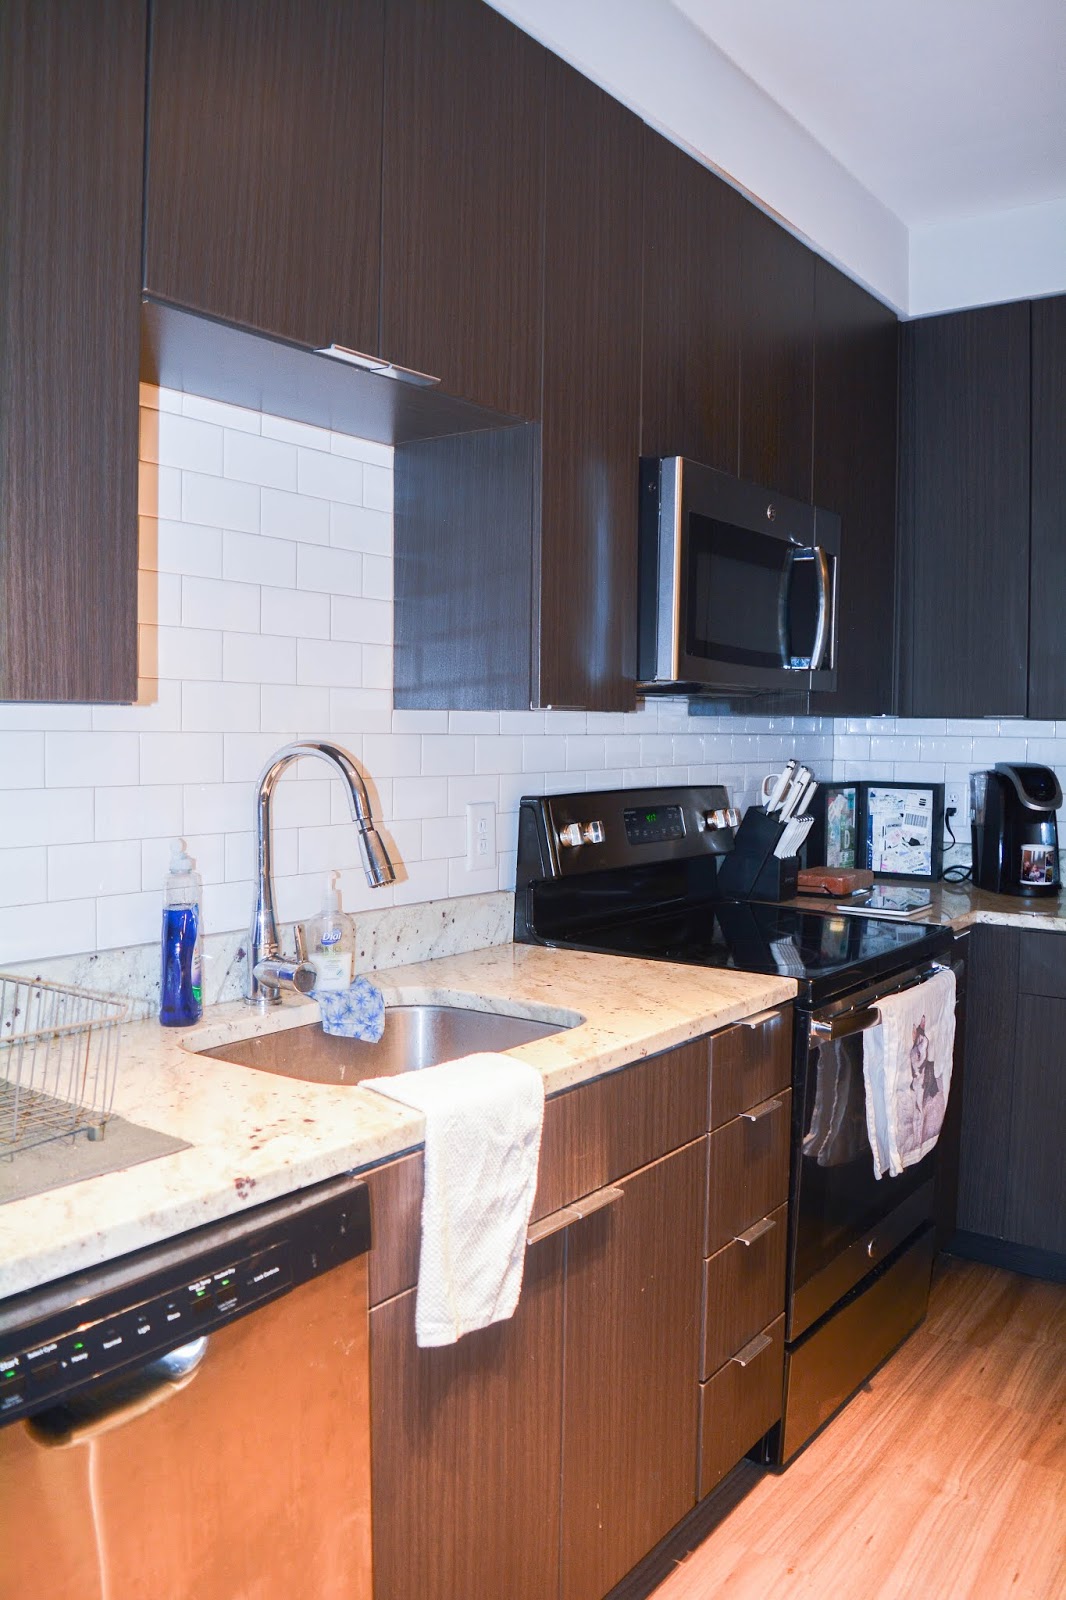 Falls Church Apartment Tour: Living Room & Kitchen